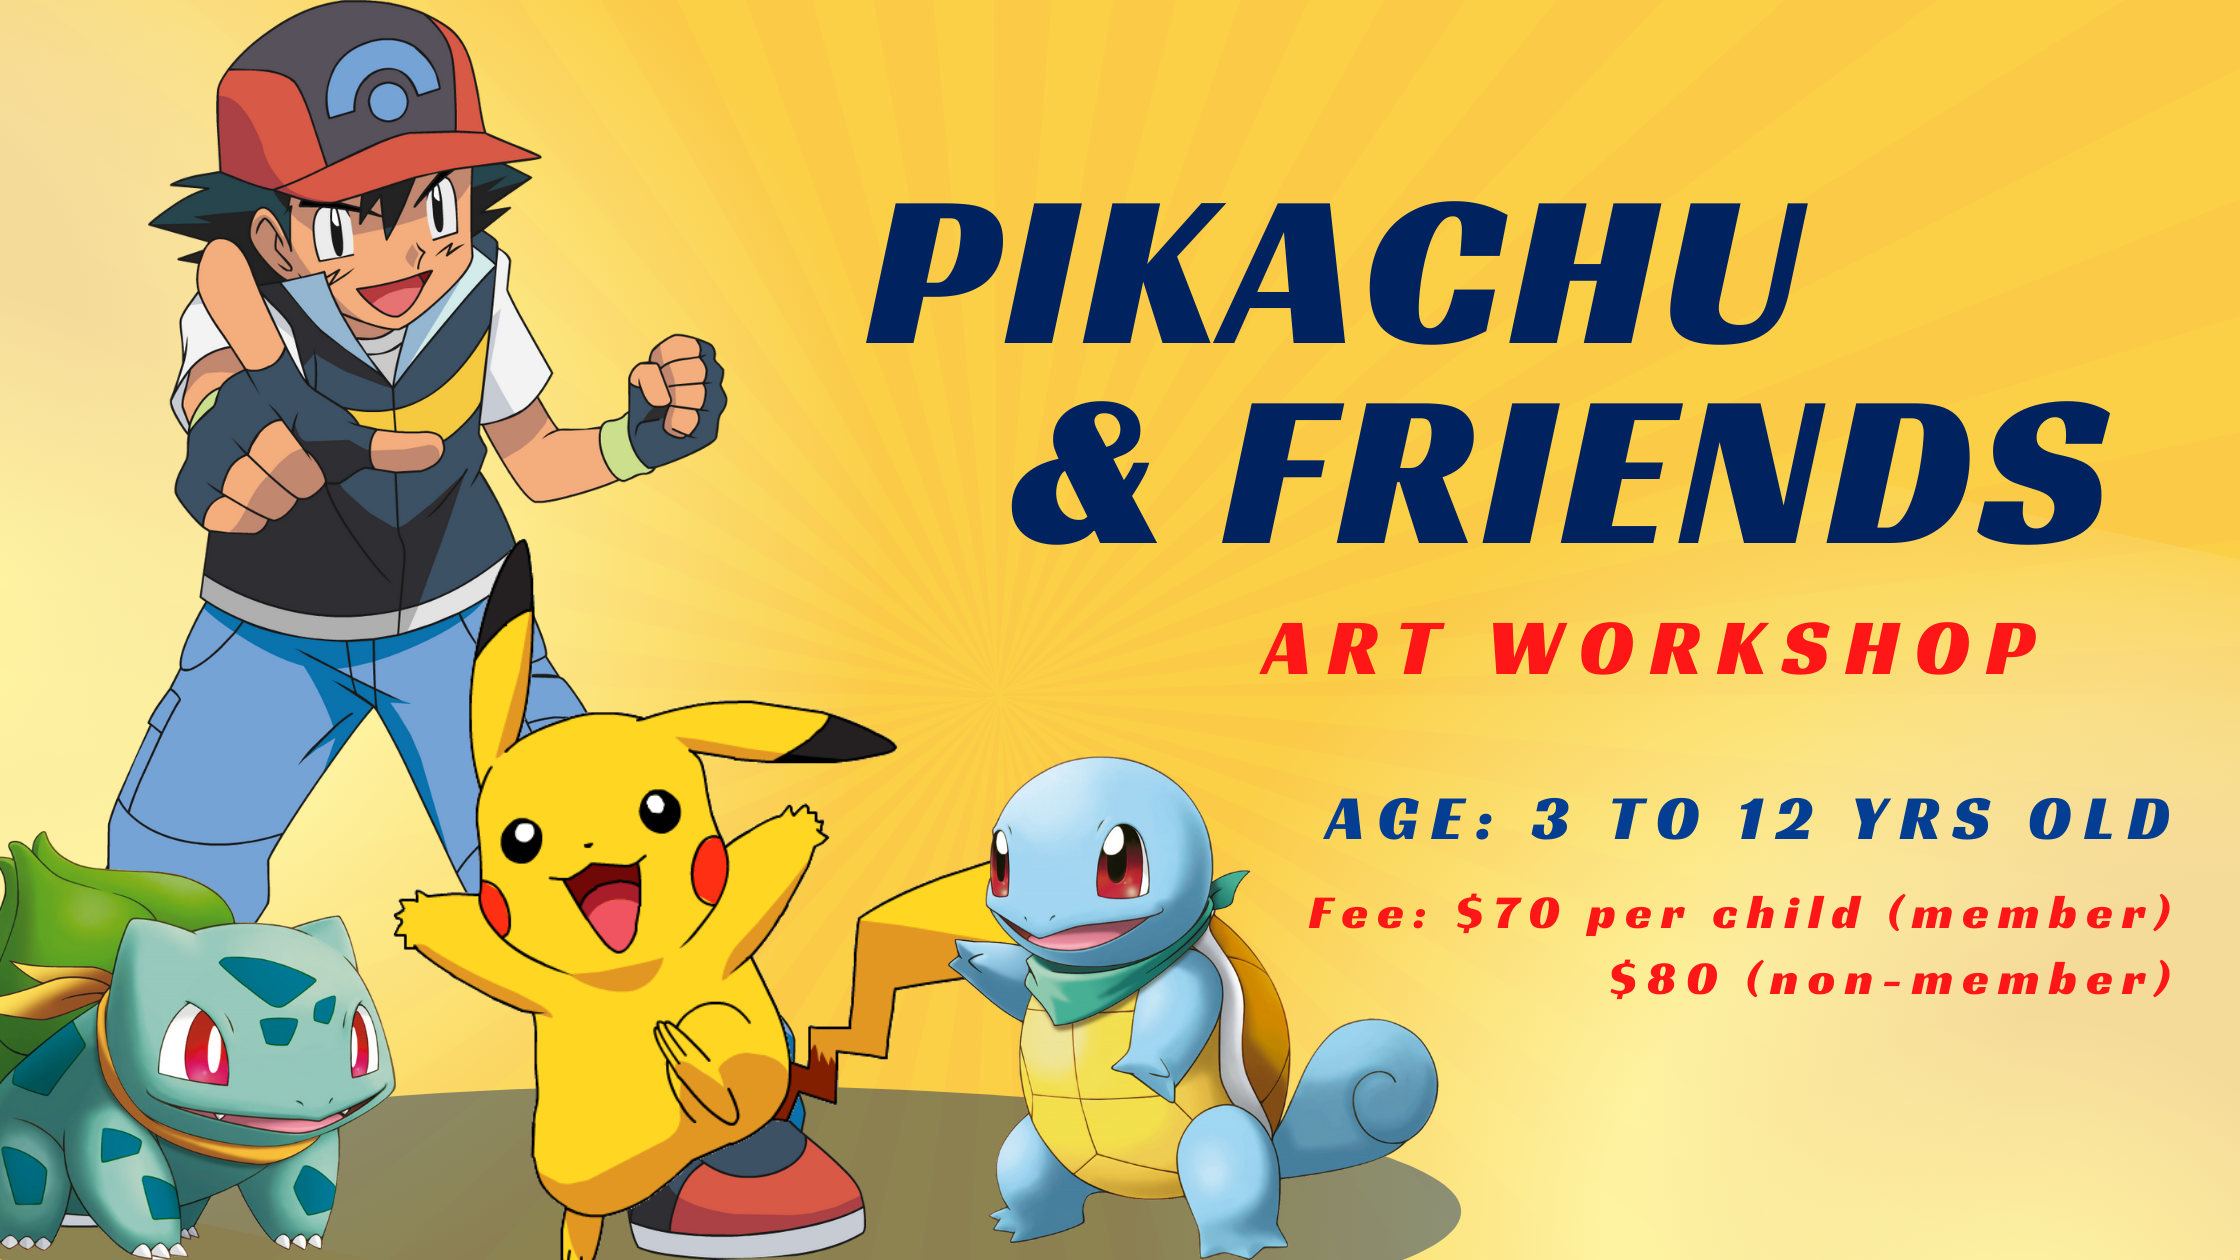 Pikachu & friends Art Workshop